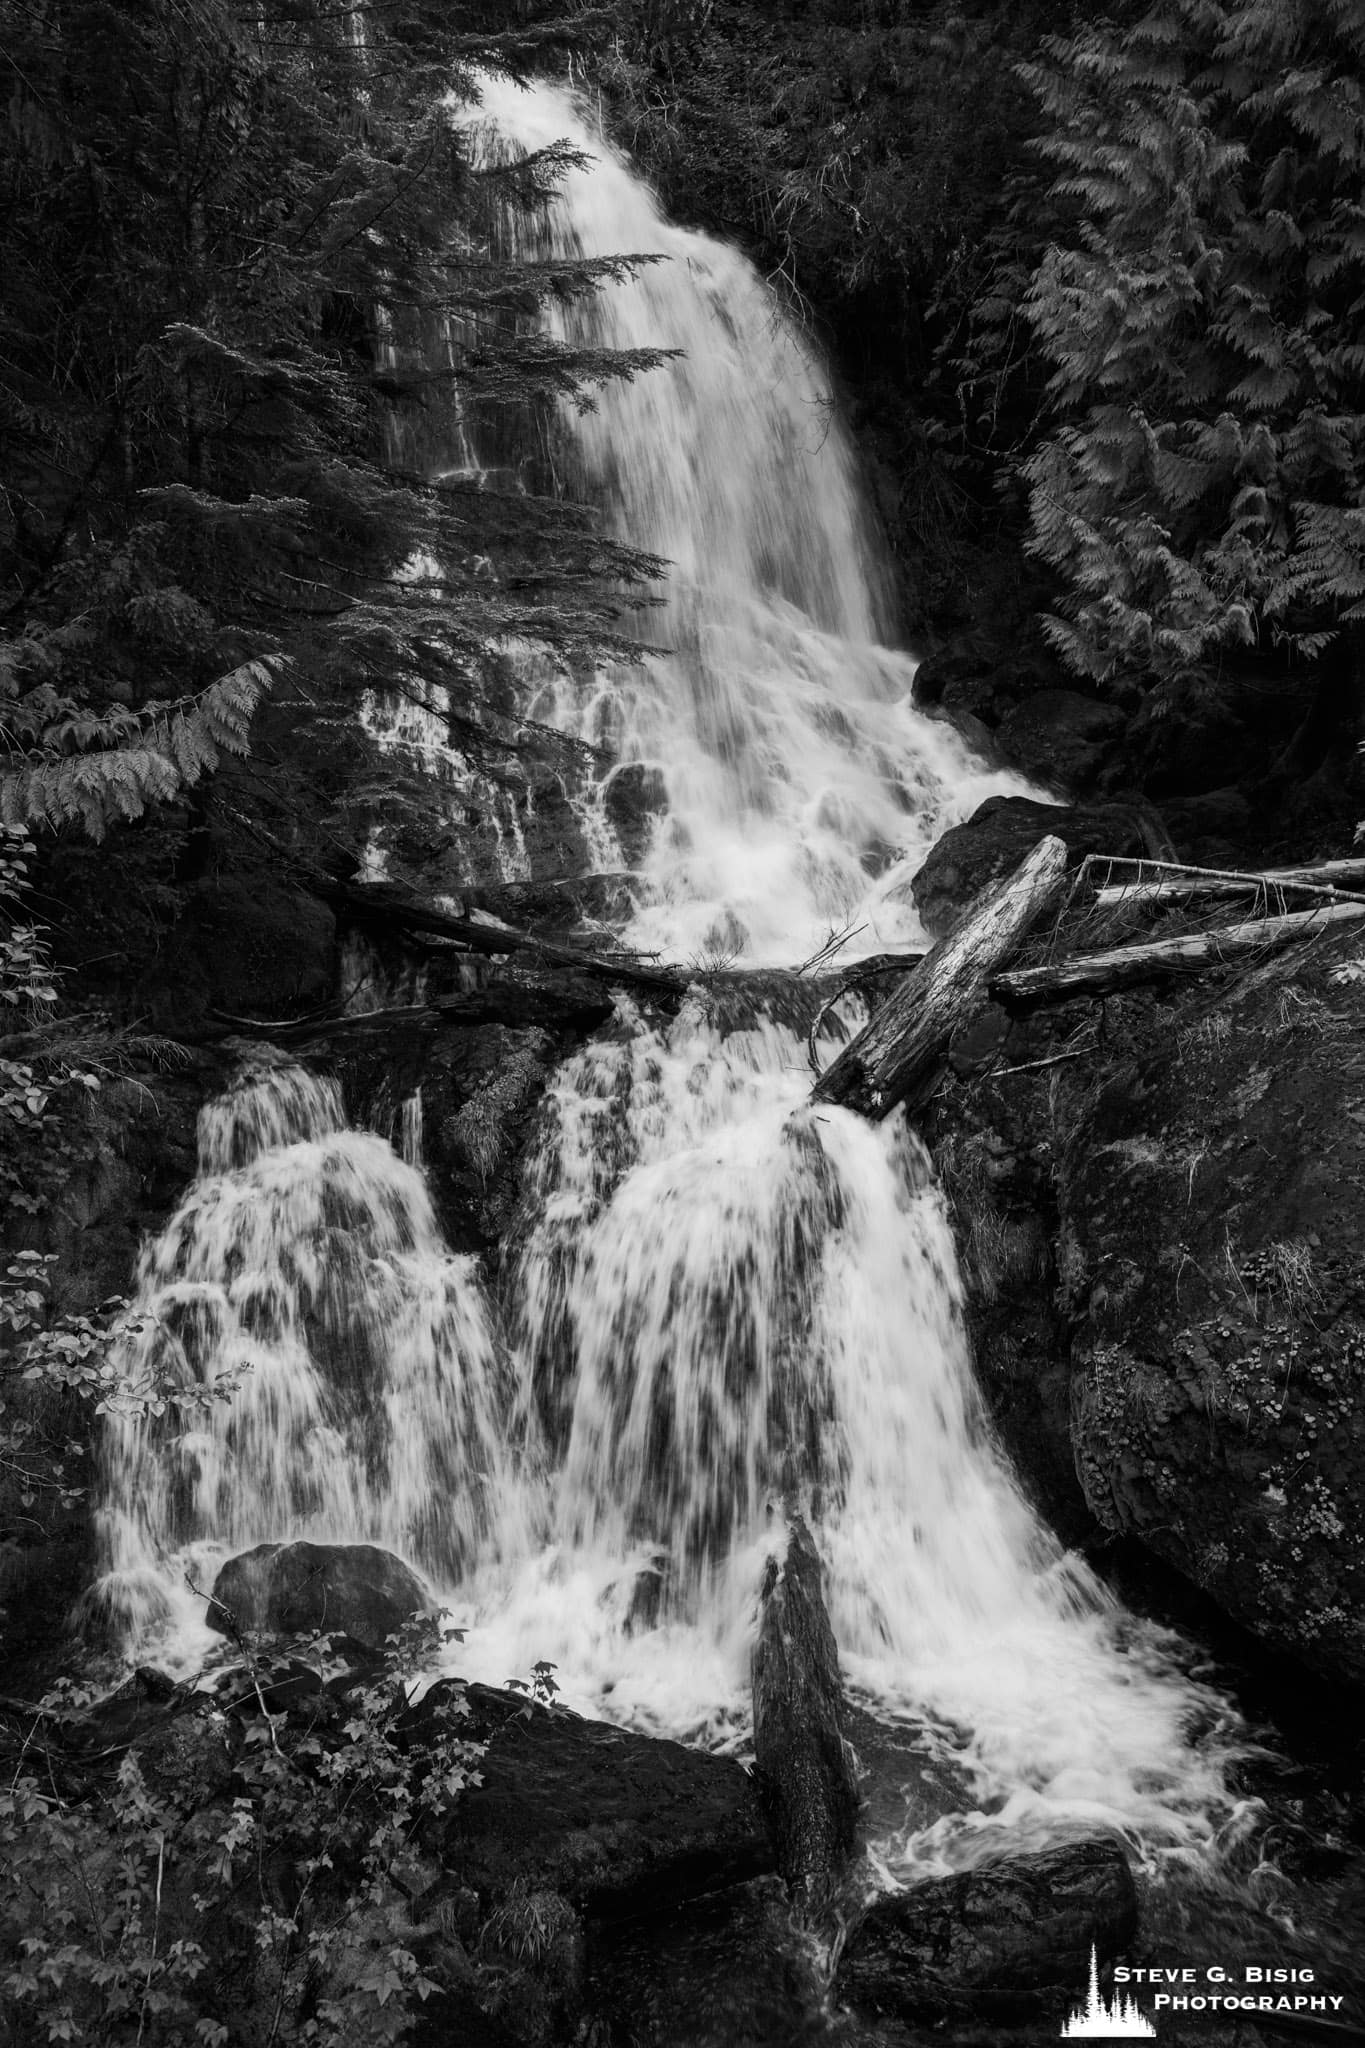 A black and white intimate landscape photograph of a waterfalls along Falls Creek at Mt. Rainier National Park, Washington.